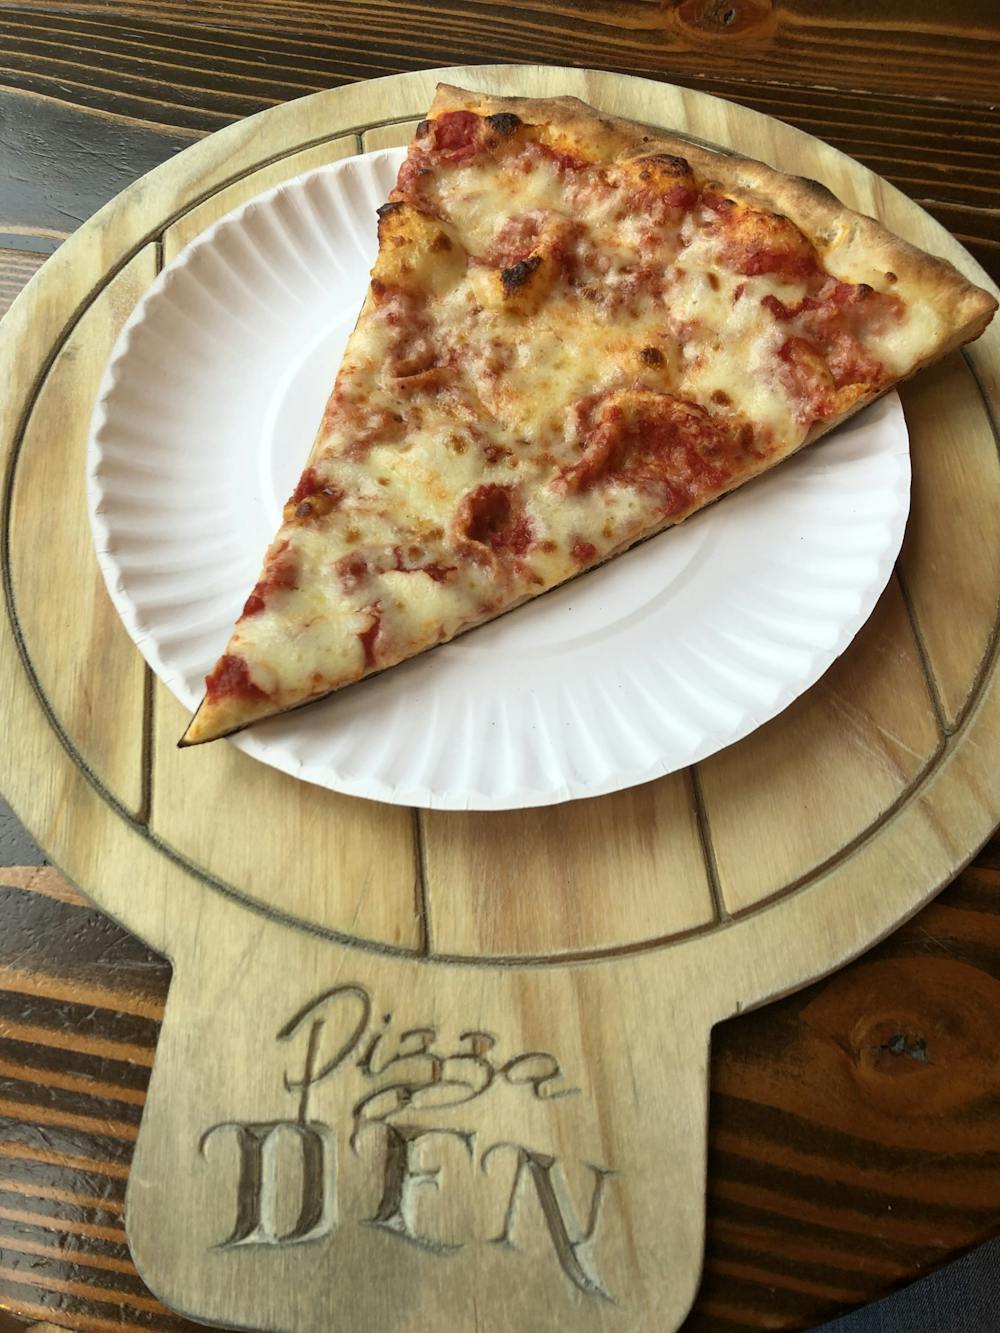 Pizza-Den-Cheese-Slice